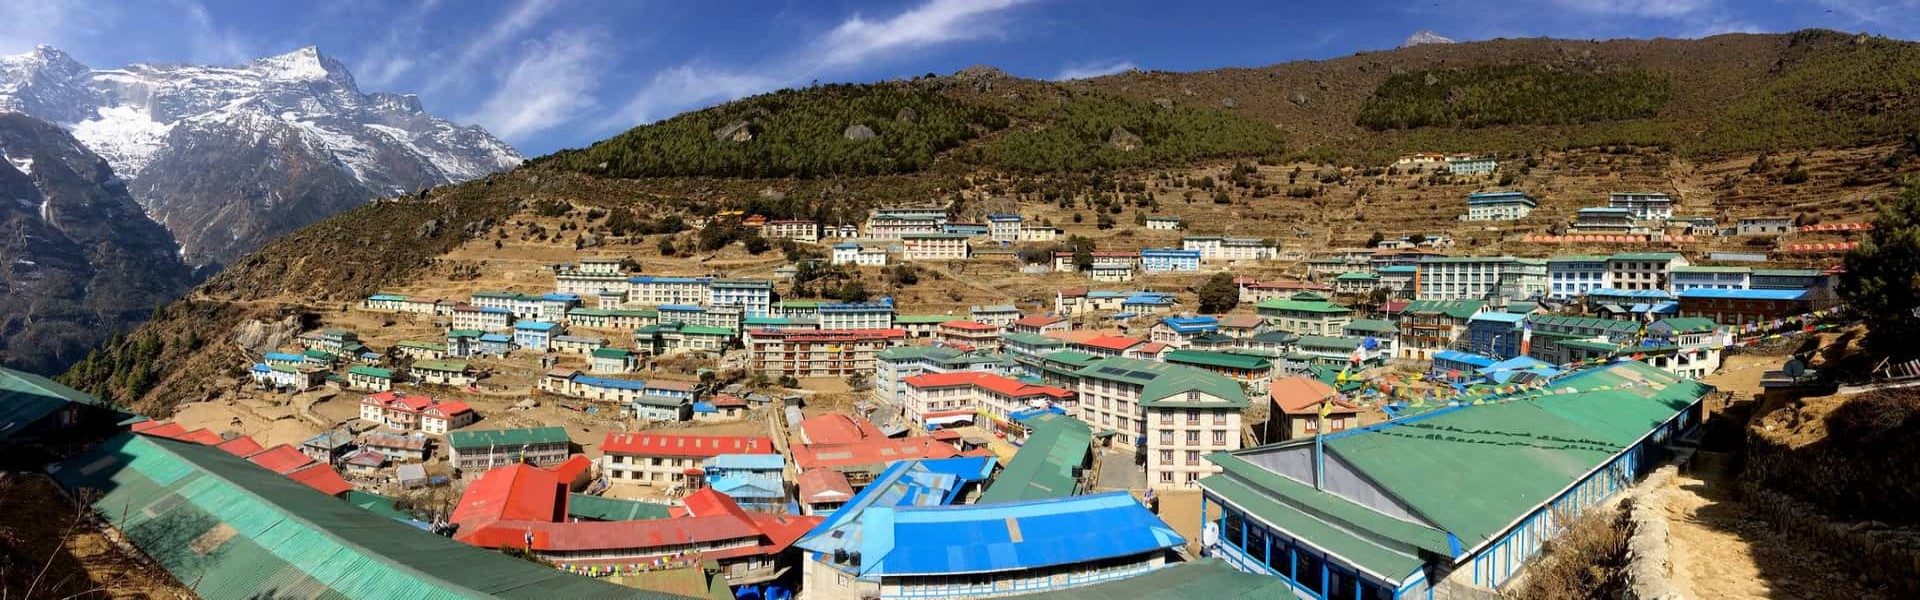 Namche Bazaar – The gateway to Everest Himalayas